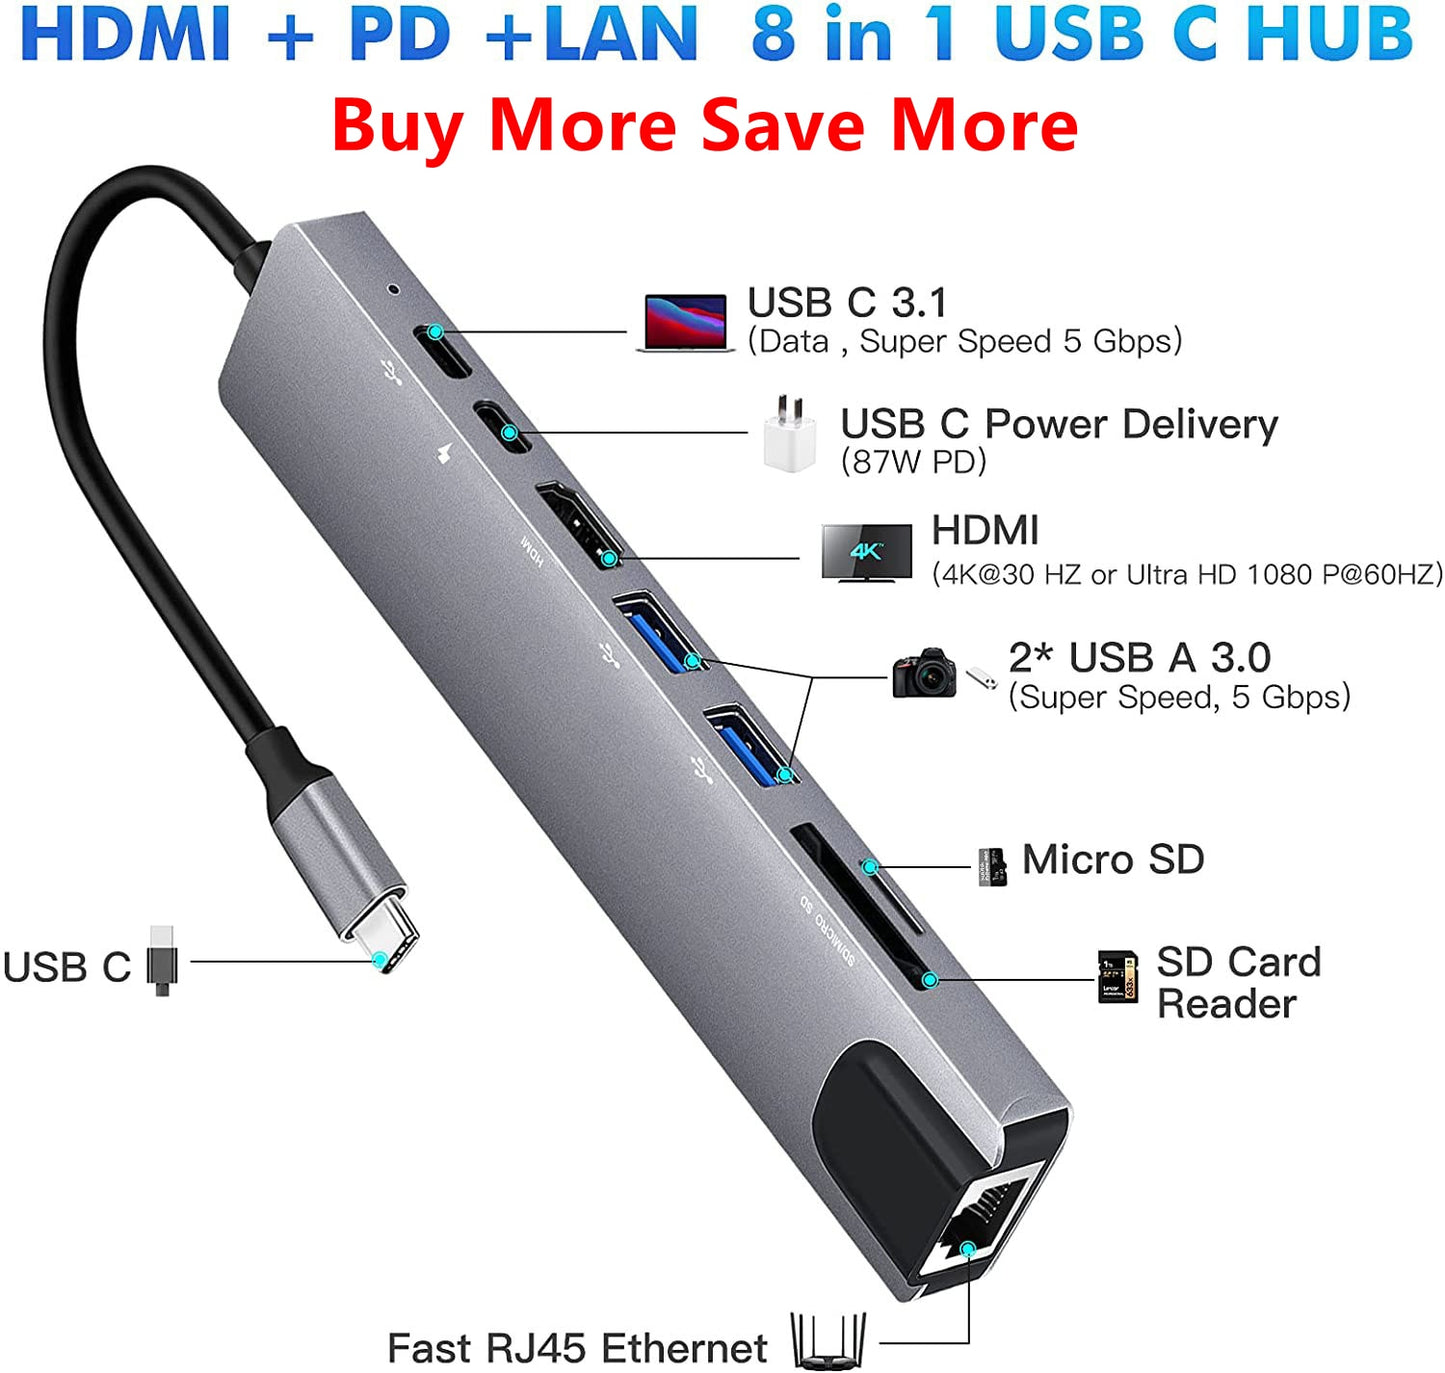 Adaptateur Multi-port USB 8 en 1